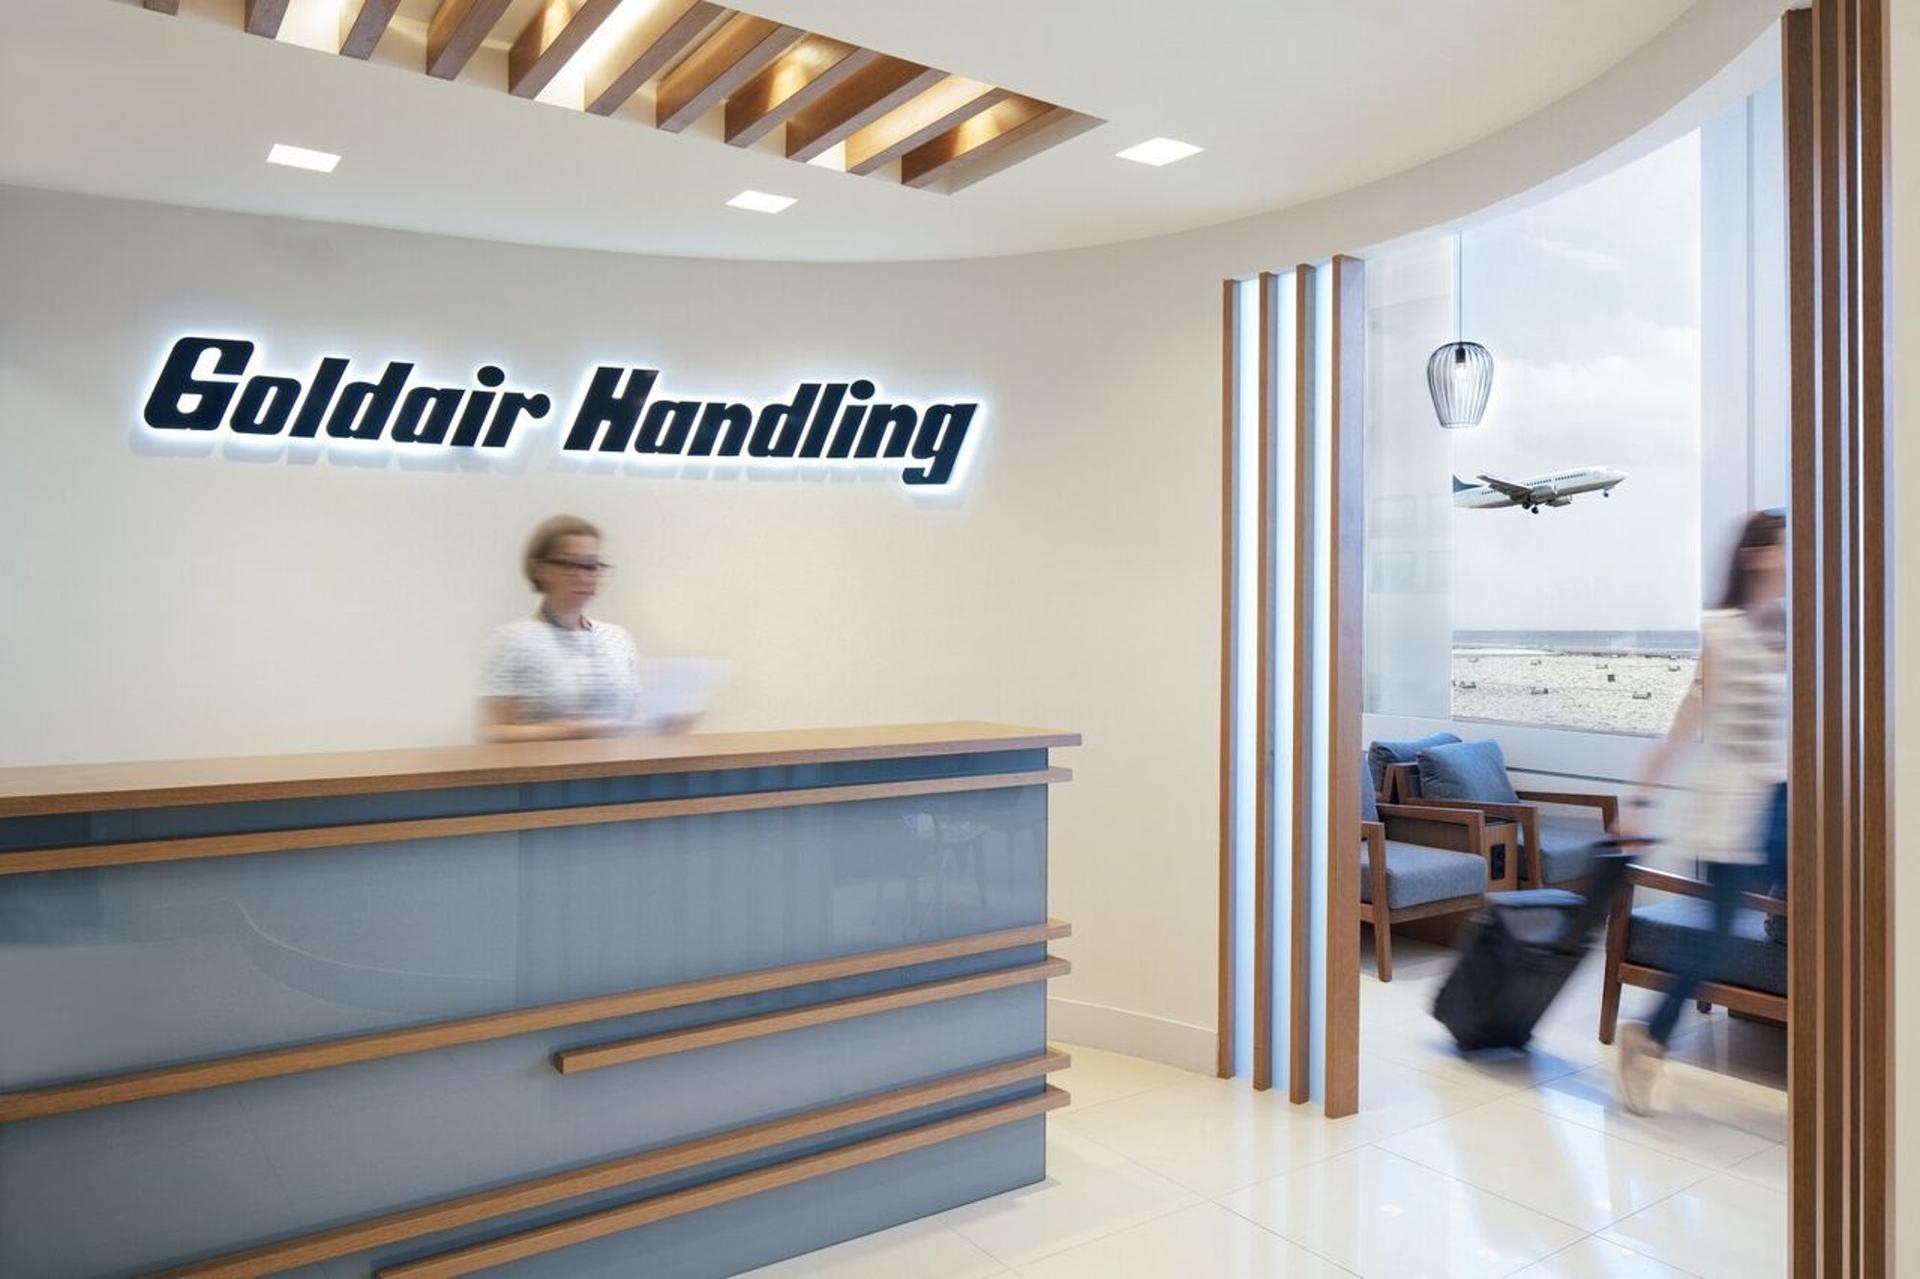 Goldair Handling Lounge (Closed for Season) image 6 of 7